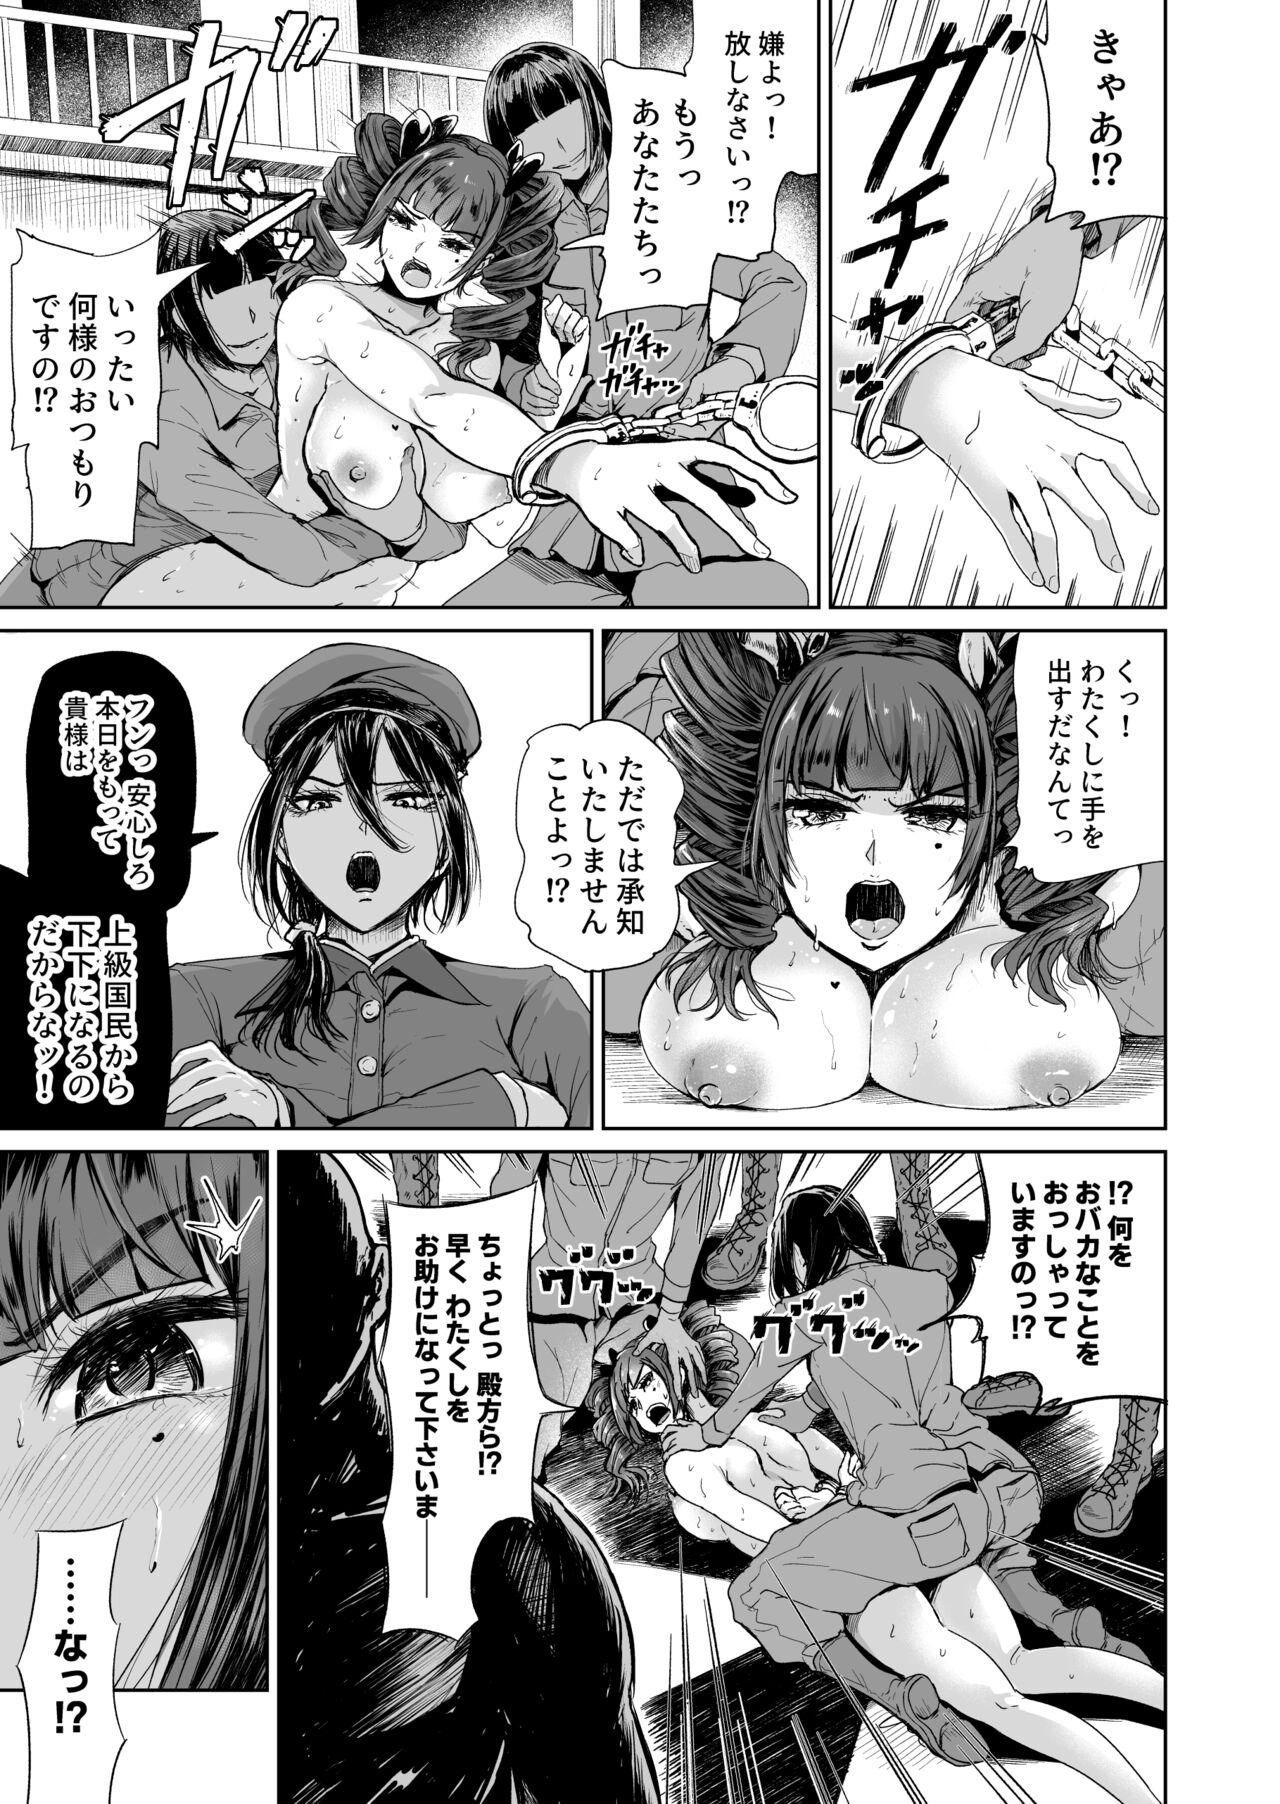 Red [Tomihero,] Onaho ni naritai ojousama - SEX Saves the World - Scene 7 Small - Page 4